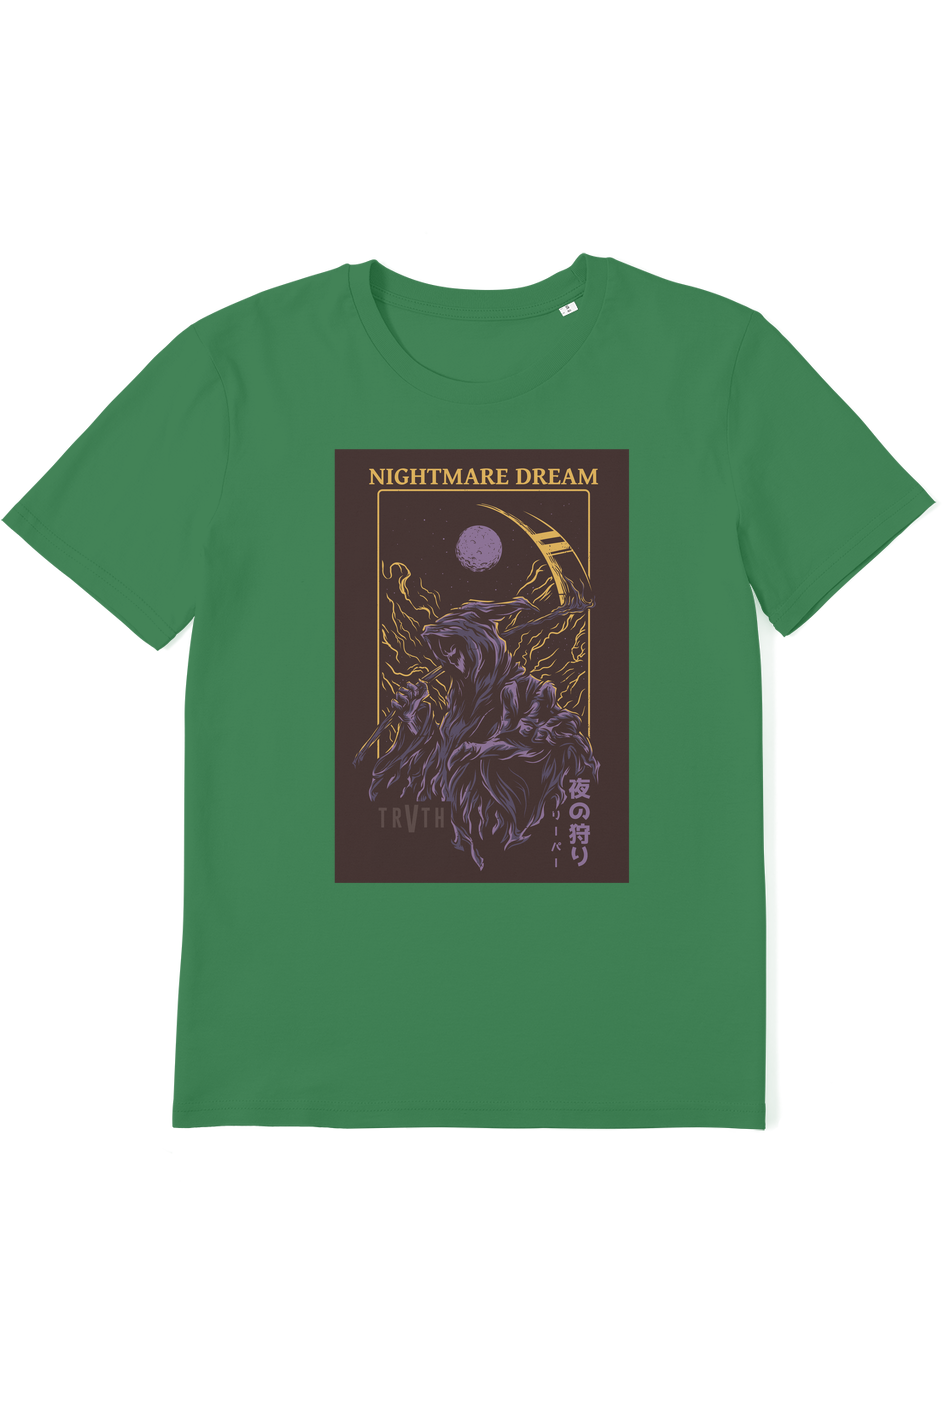 Traum Nightmare Organic T-Shirt vegan, sustainable, organic streetwear, - TRVTH ORGANIC CLOTHING